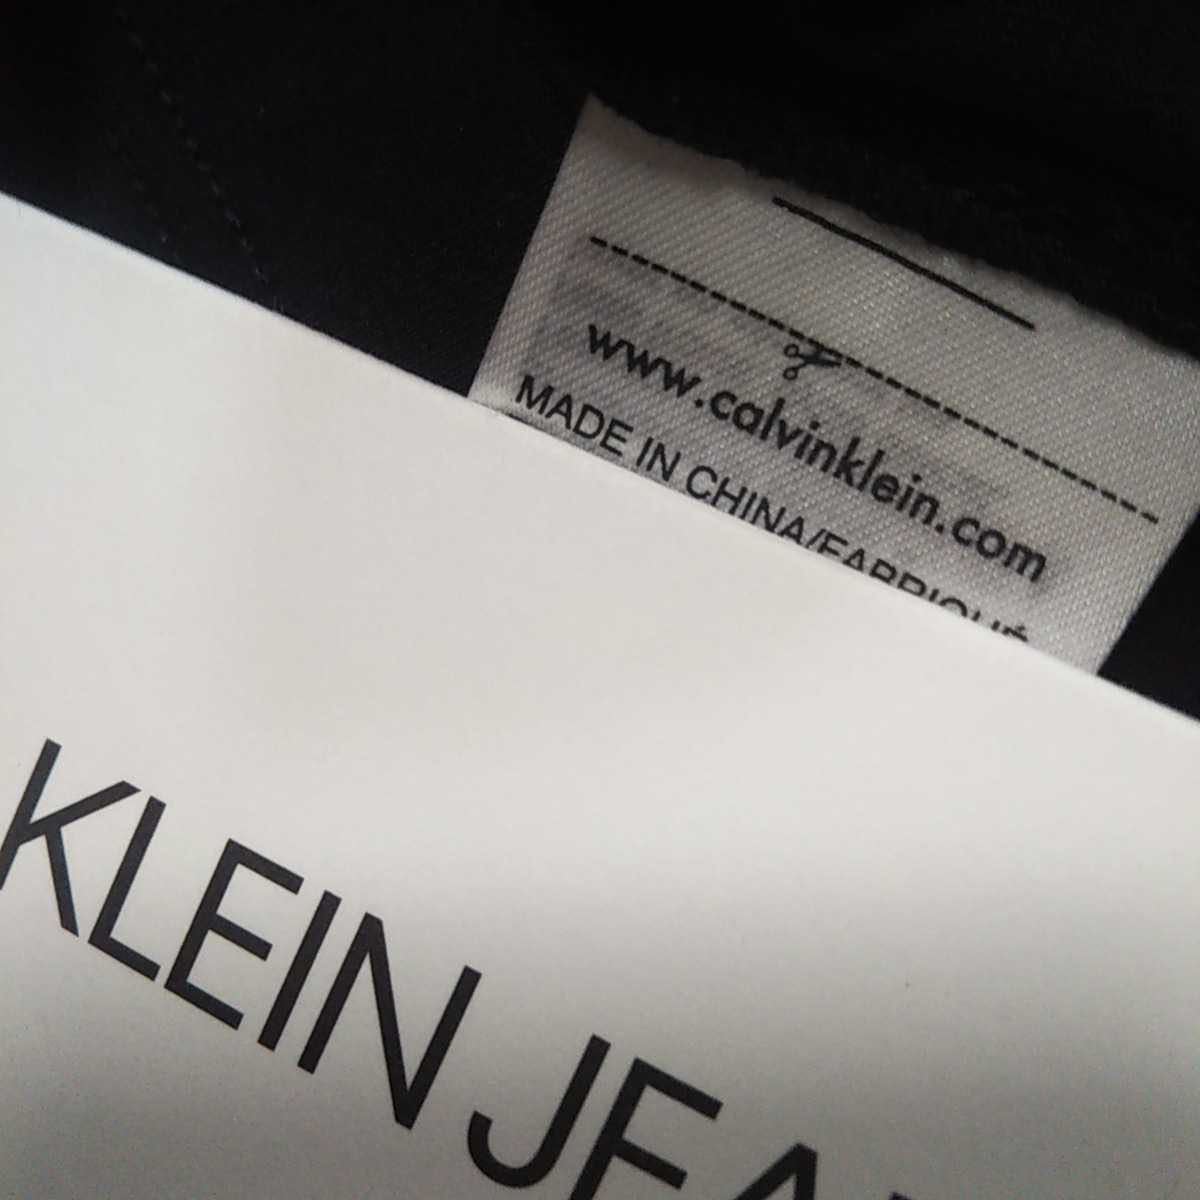  Calvin * Klein calvin klein jeans black color tops long sleeve shirt new goods 